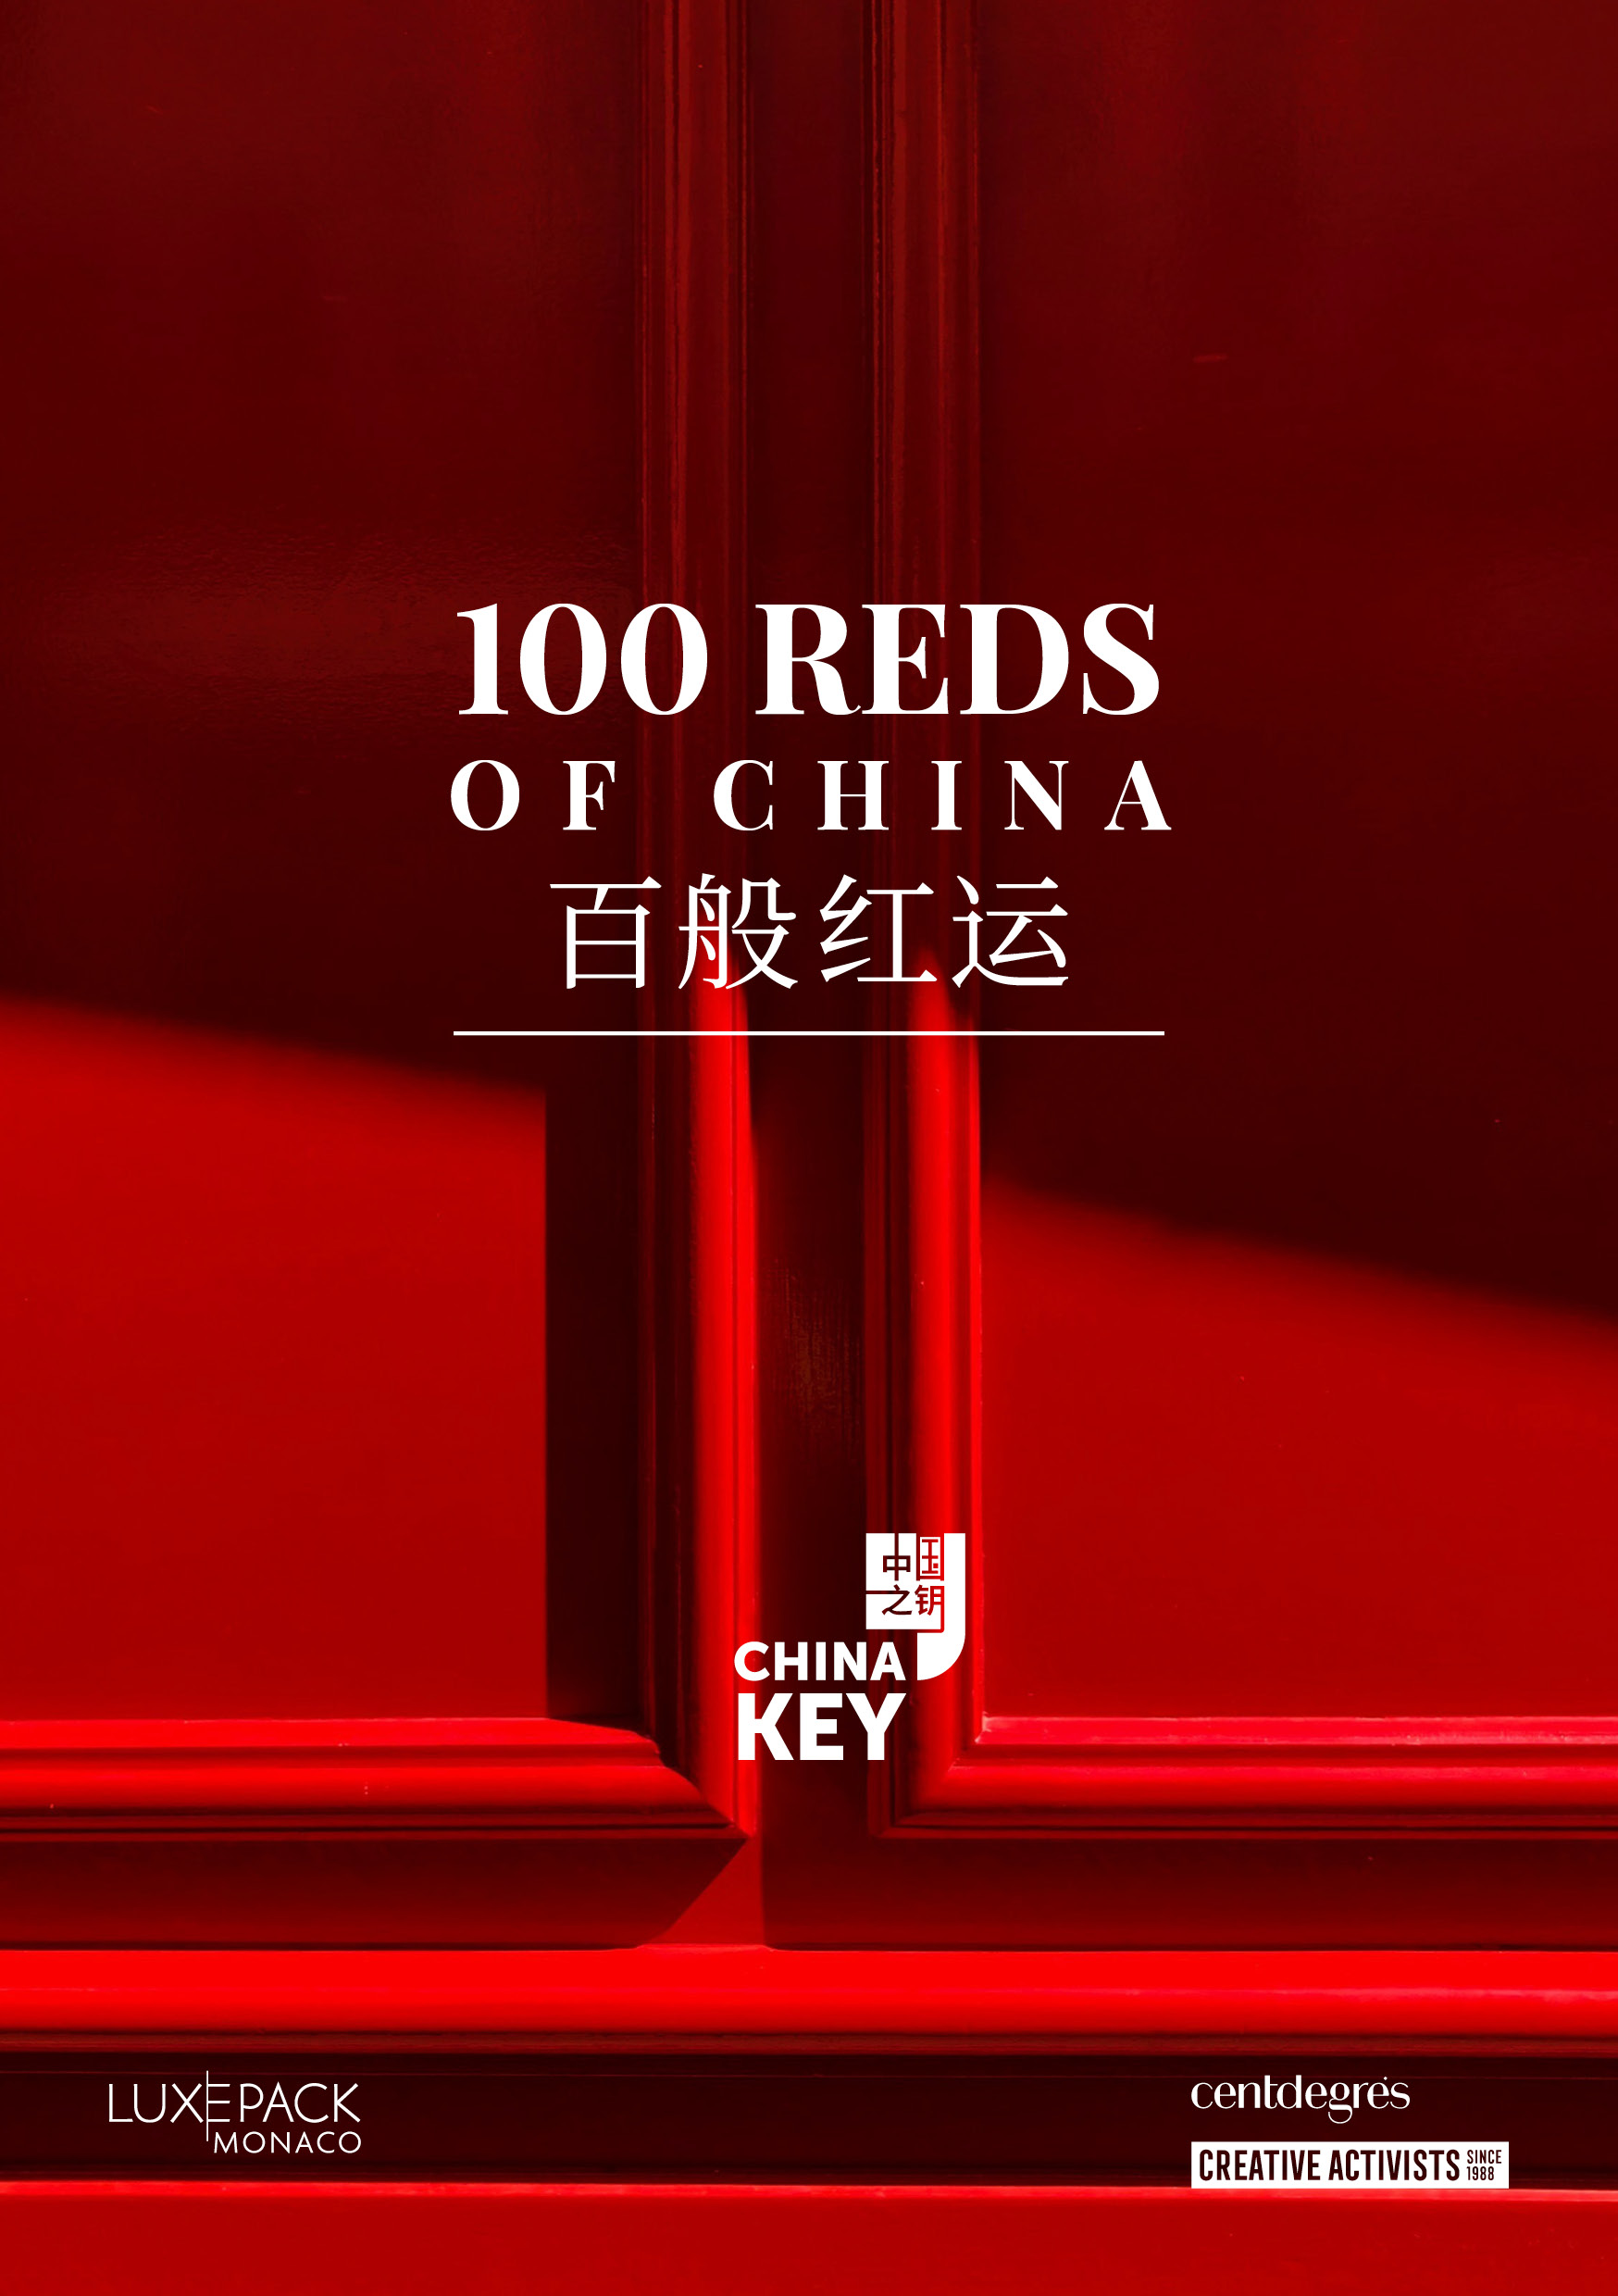 LUXEPACK MONACO 2021 – 100 REDS OF CHINA